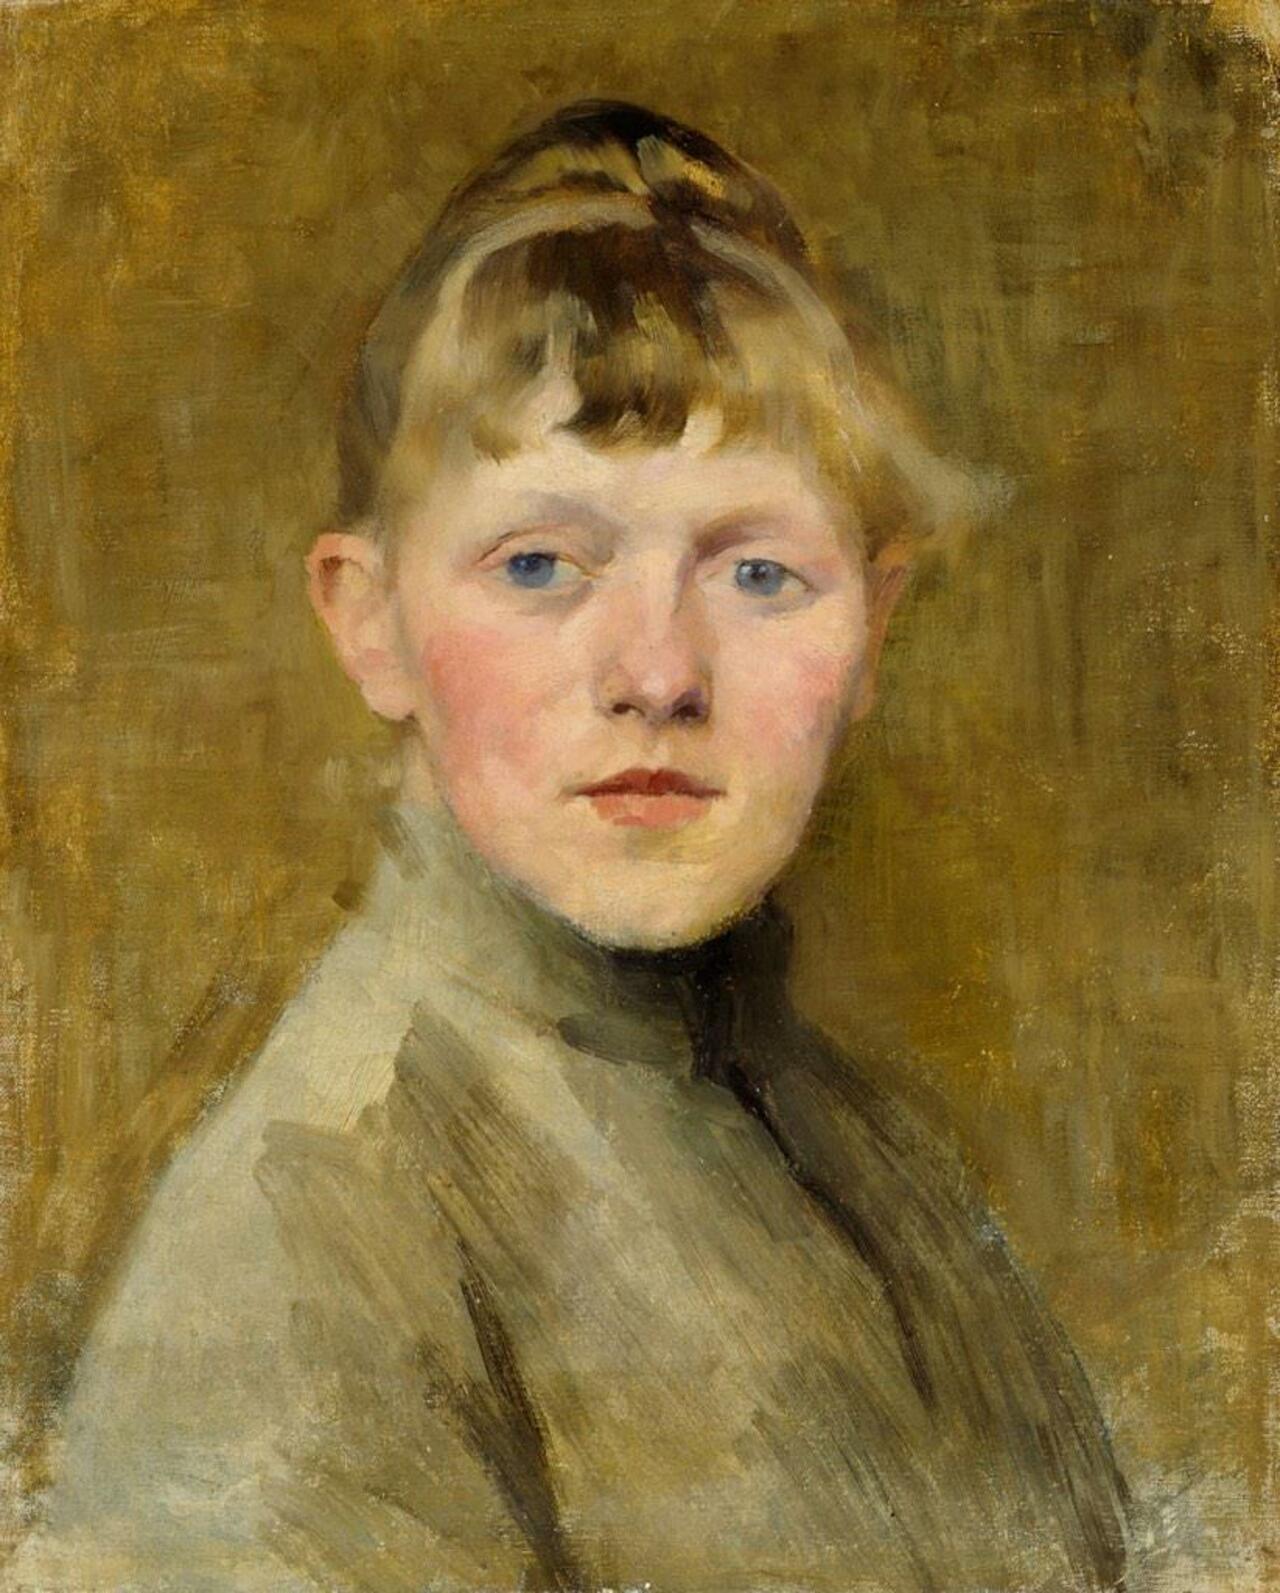 “@geminicat7: 'Self-Portrait'
Helene Schjerfbeck, 1885 #art http://t.co/SqDMpCnI1O